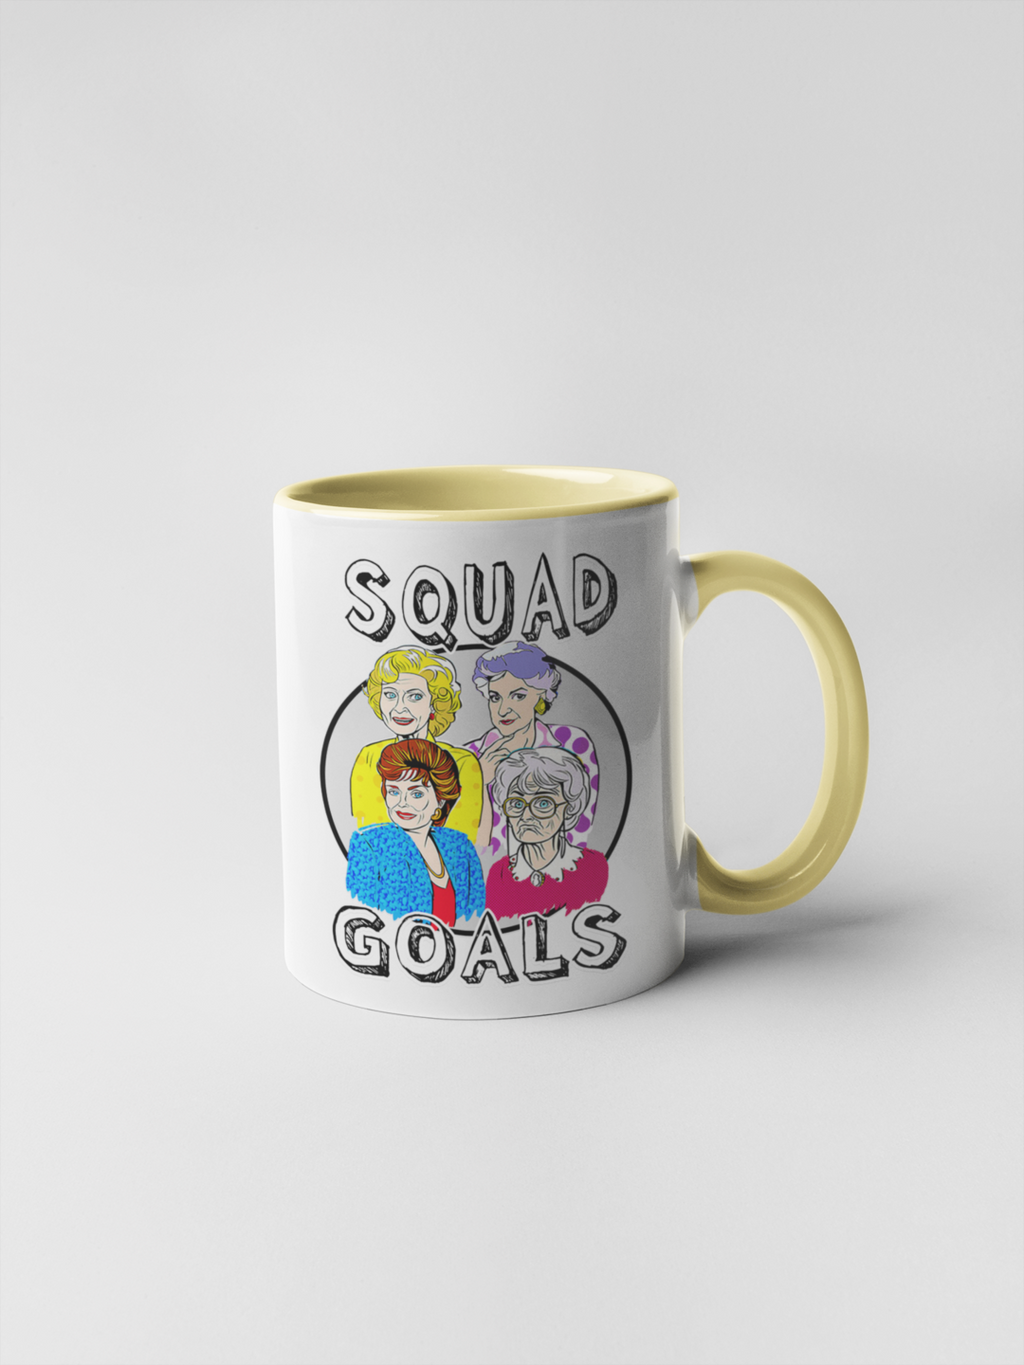 SQUAD GOALS - GOLDEN GIRLS MUG